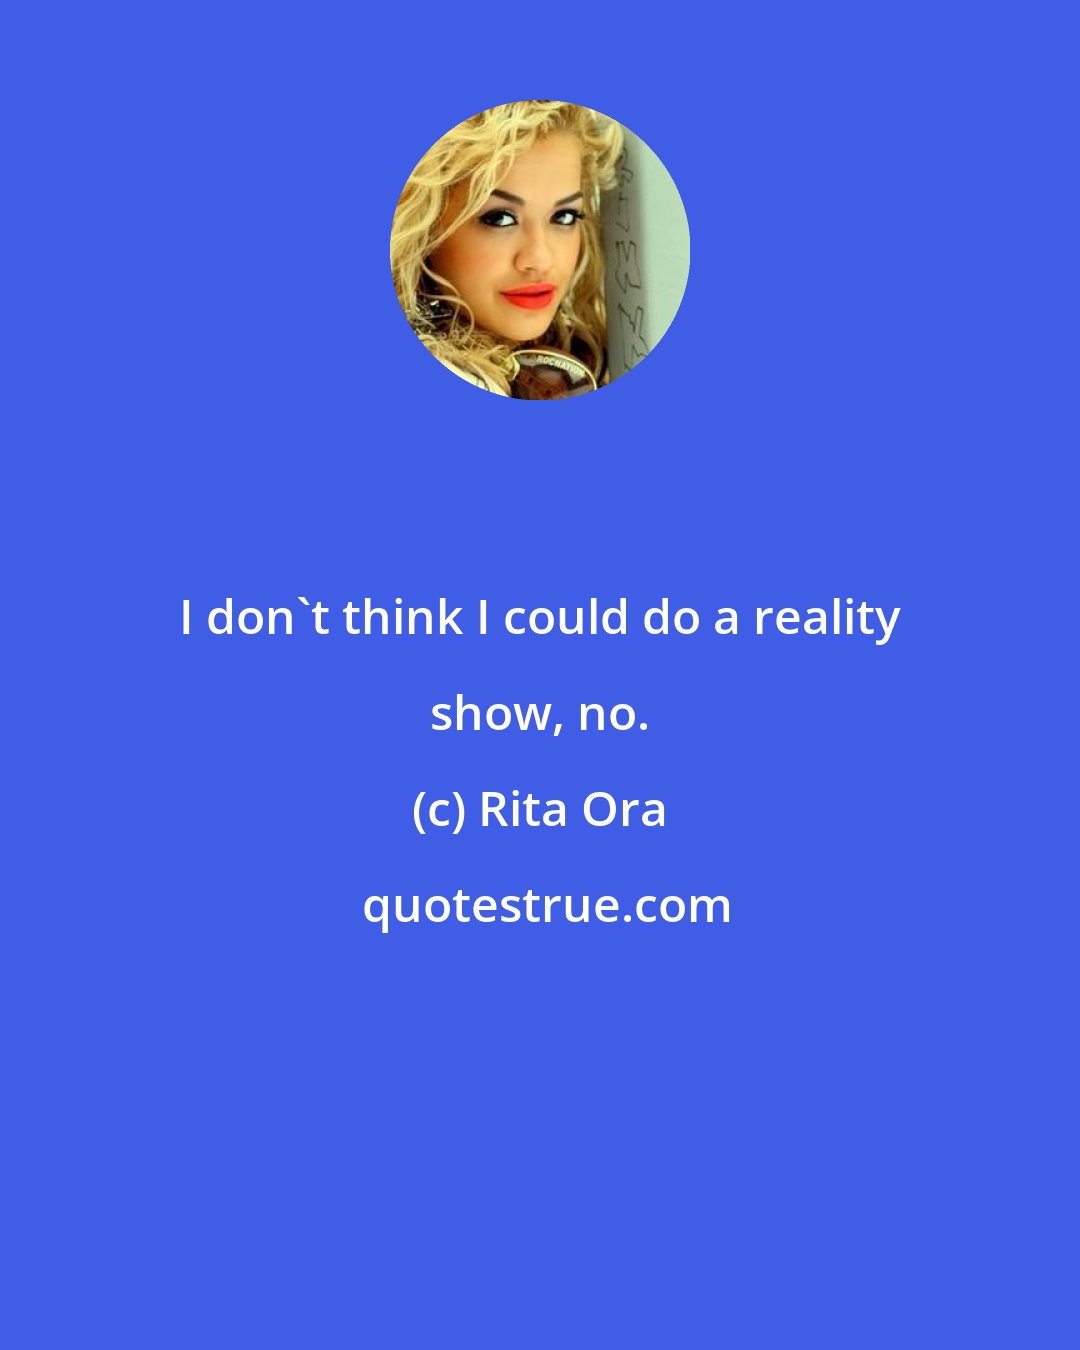 Rita Ora: I don't think I could do a reality show, no.